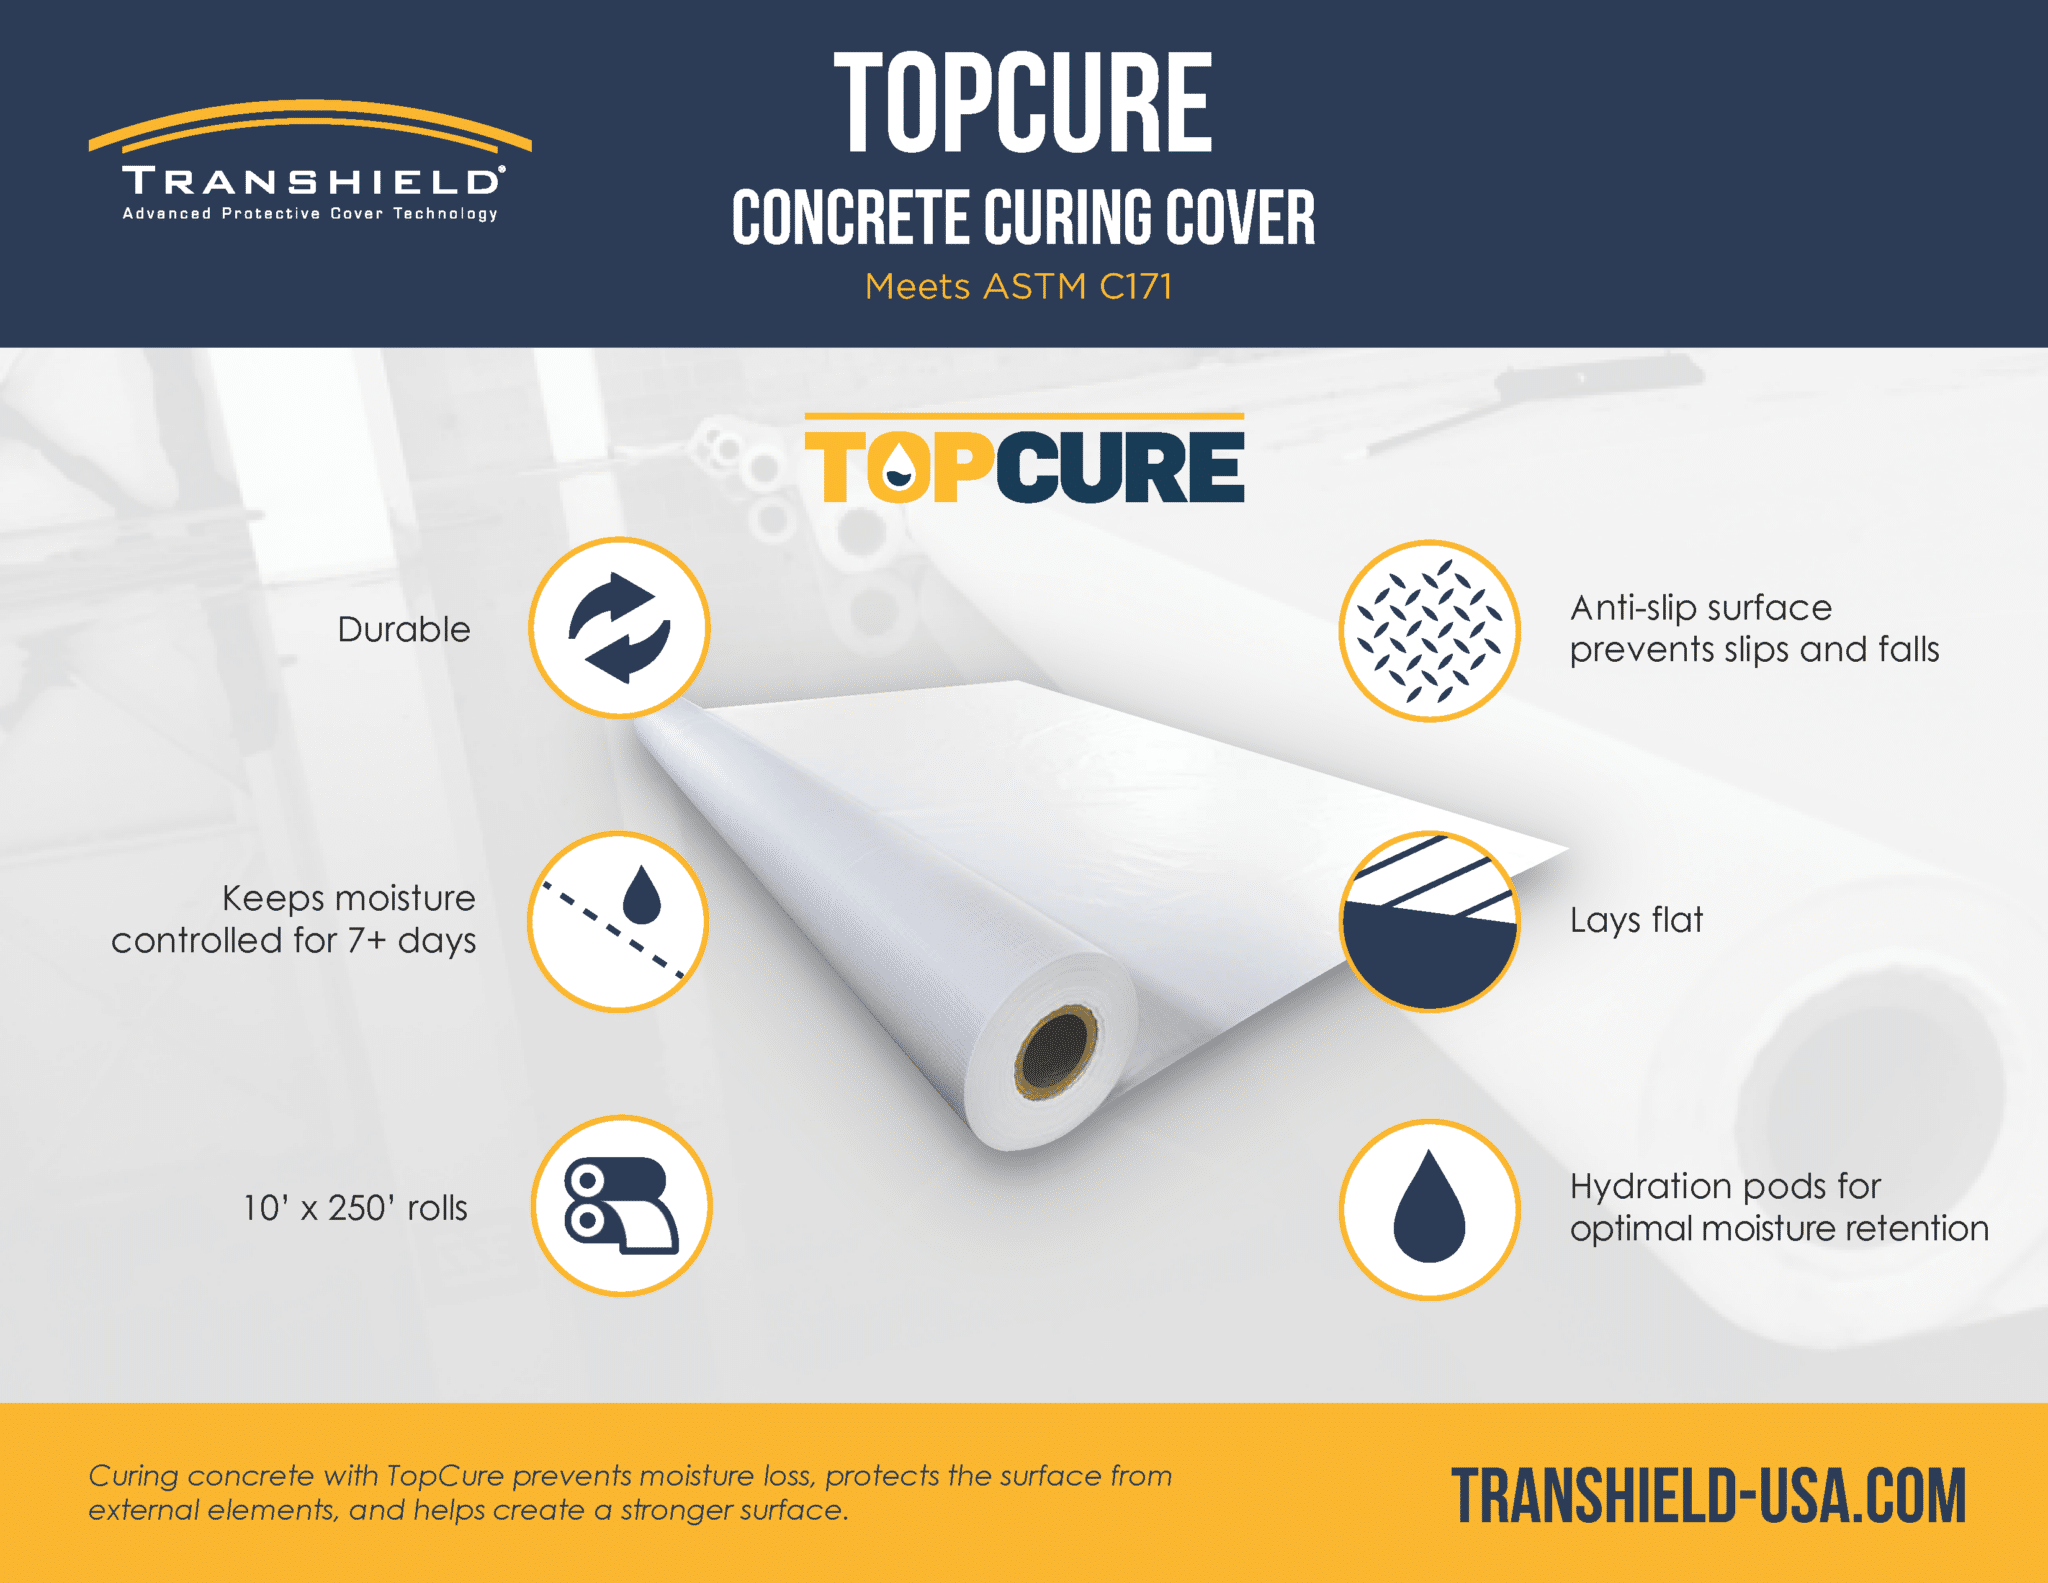 TopCure Concrete Curing Cover